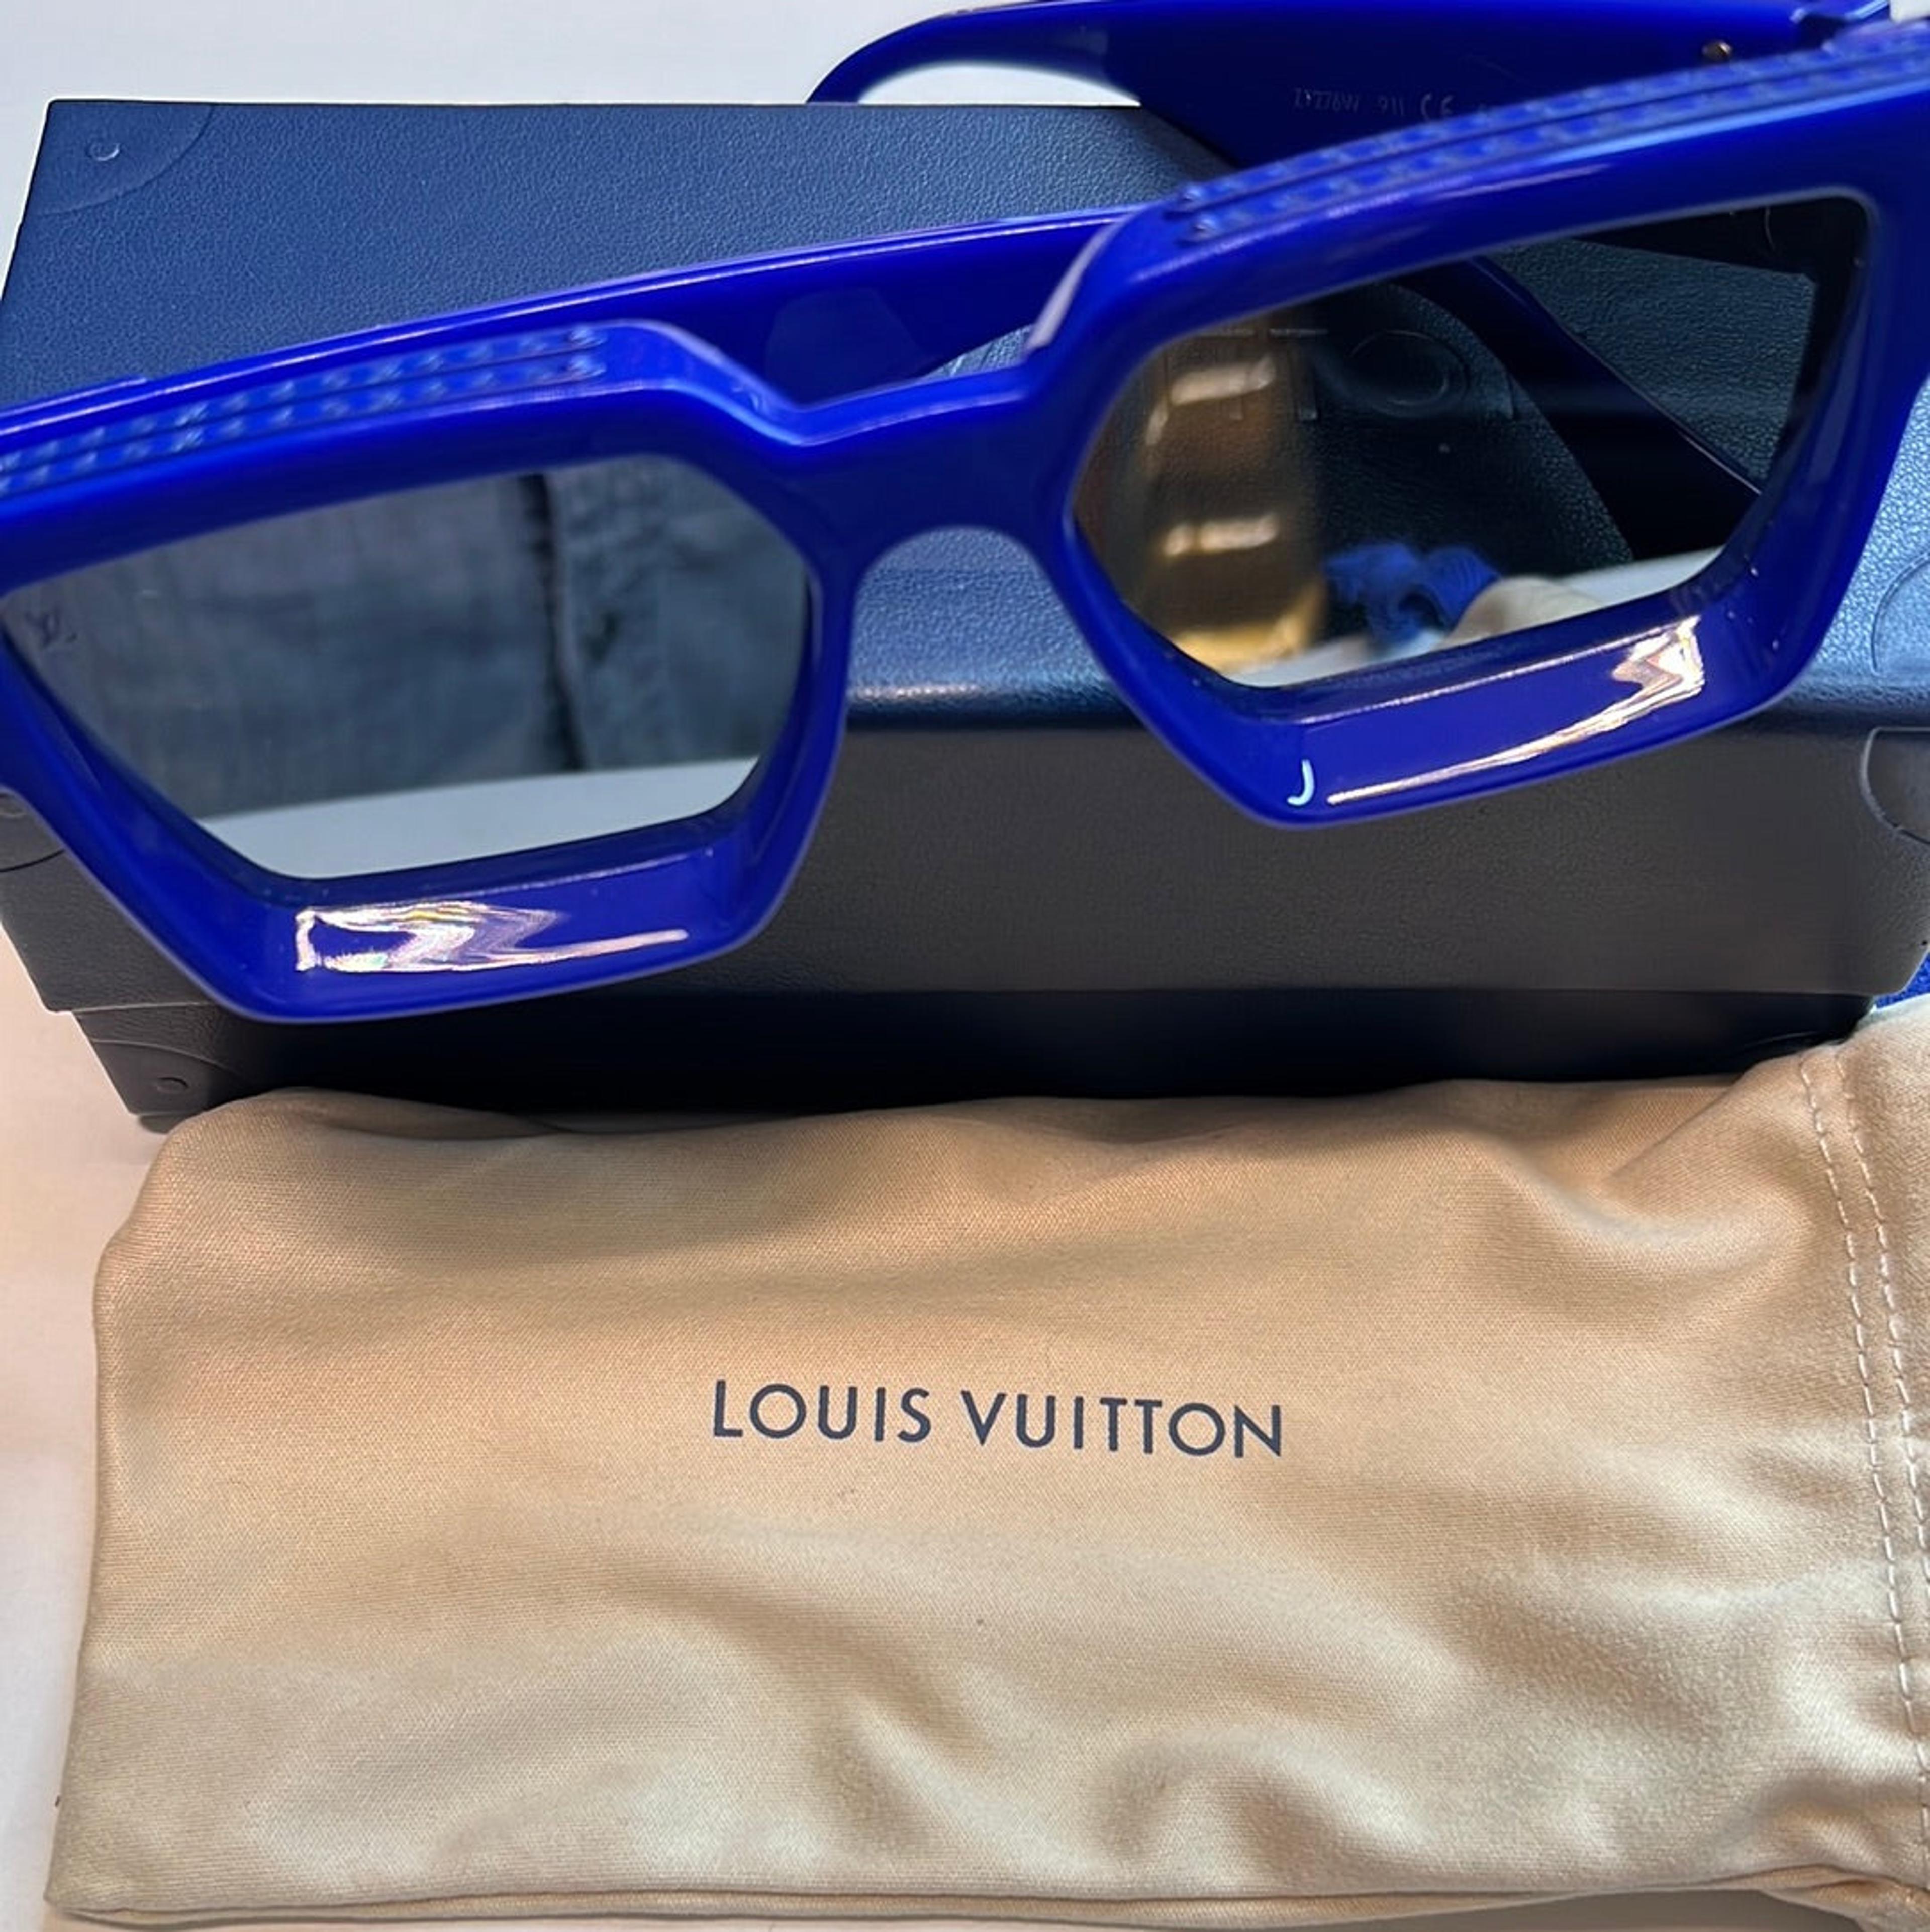 NTWRK - SNEAK PEAK 13 Preloved Louis Vuitton Blue 1.1 Millionaires Squar